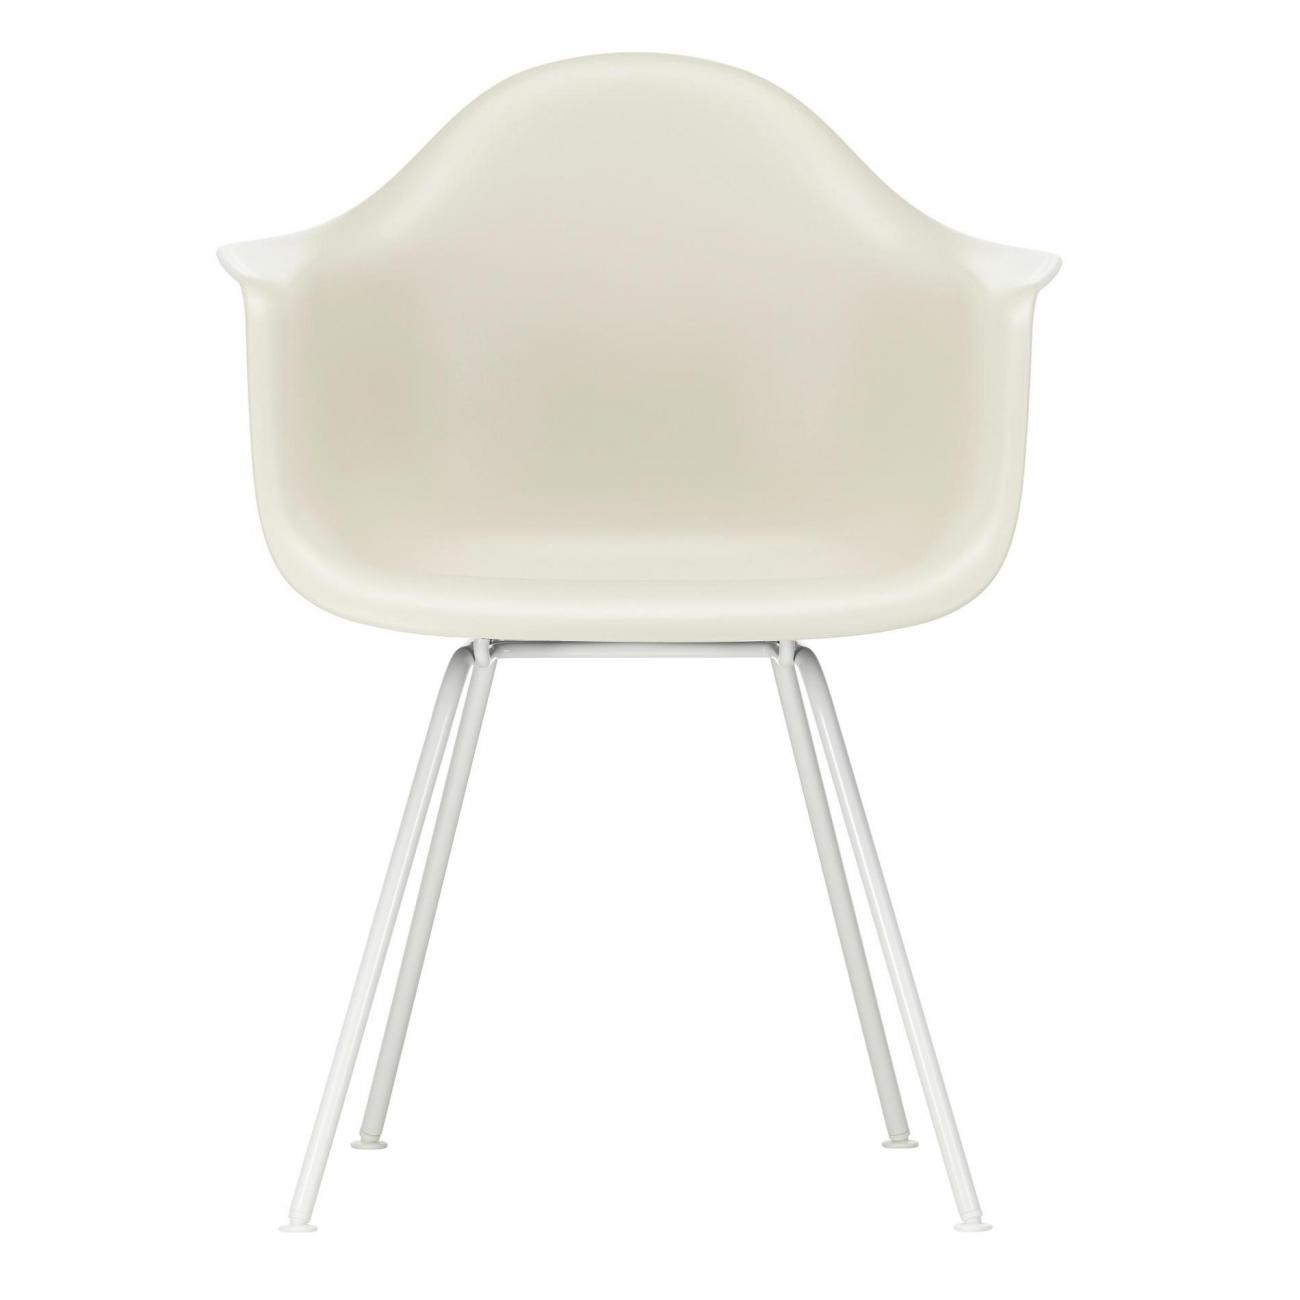 https://www.fundesign.nl/media/catalog/product/v/i/vitra_eames-plastic-chair-dax-gestell-weiss_1900x1900-id1990085-9b3335fa0e0510f8d0aed04630b220a1.jpg